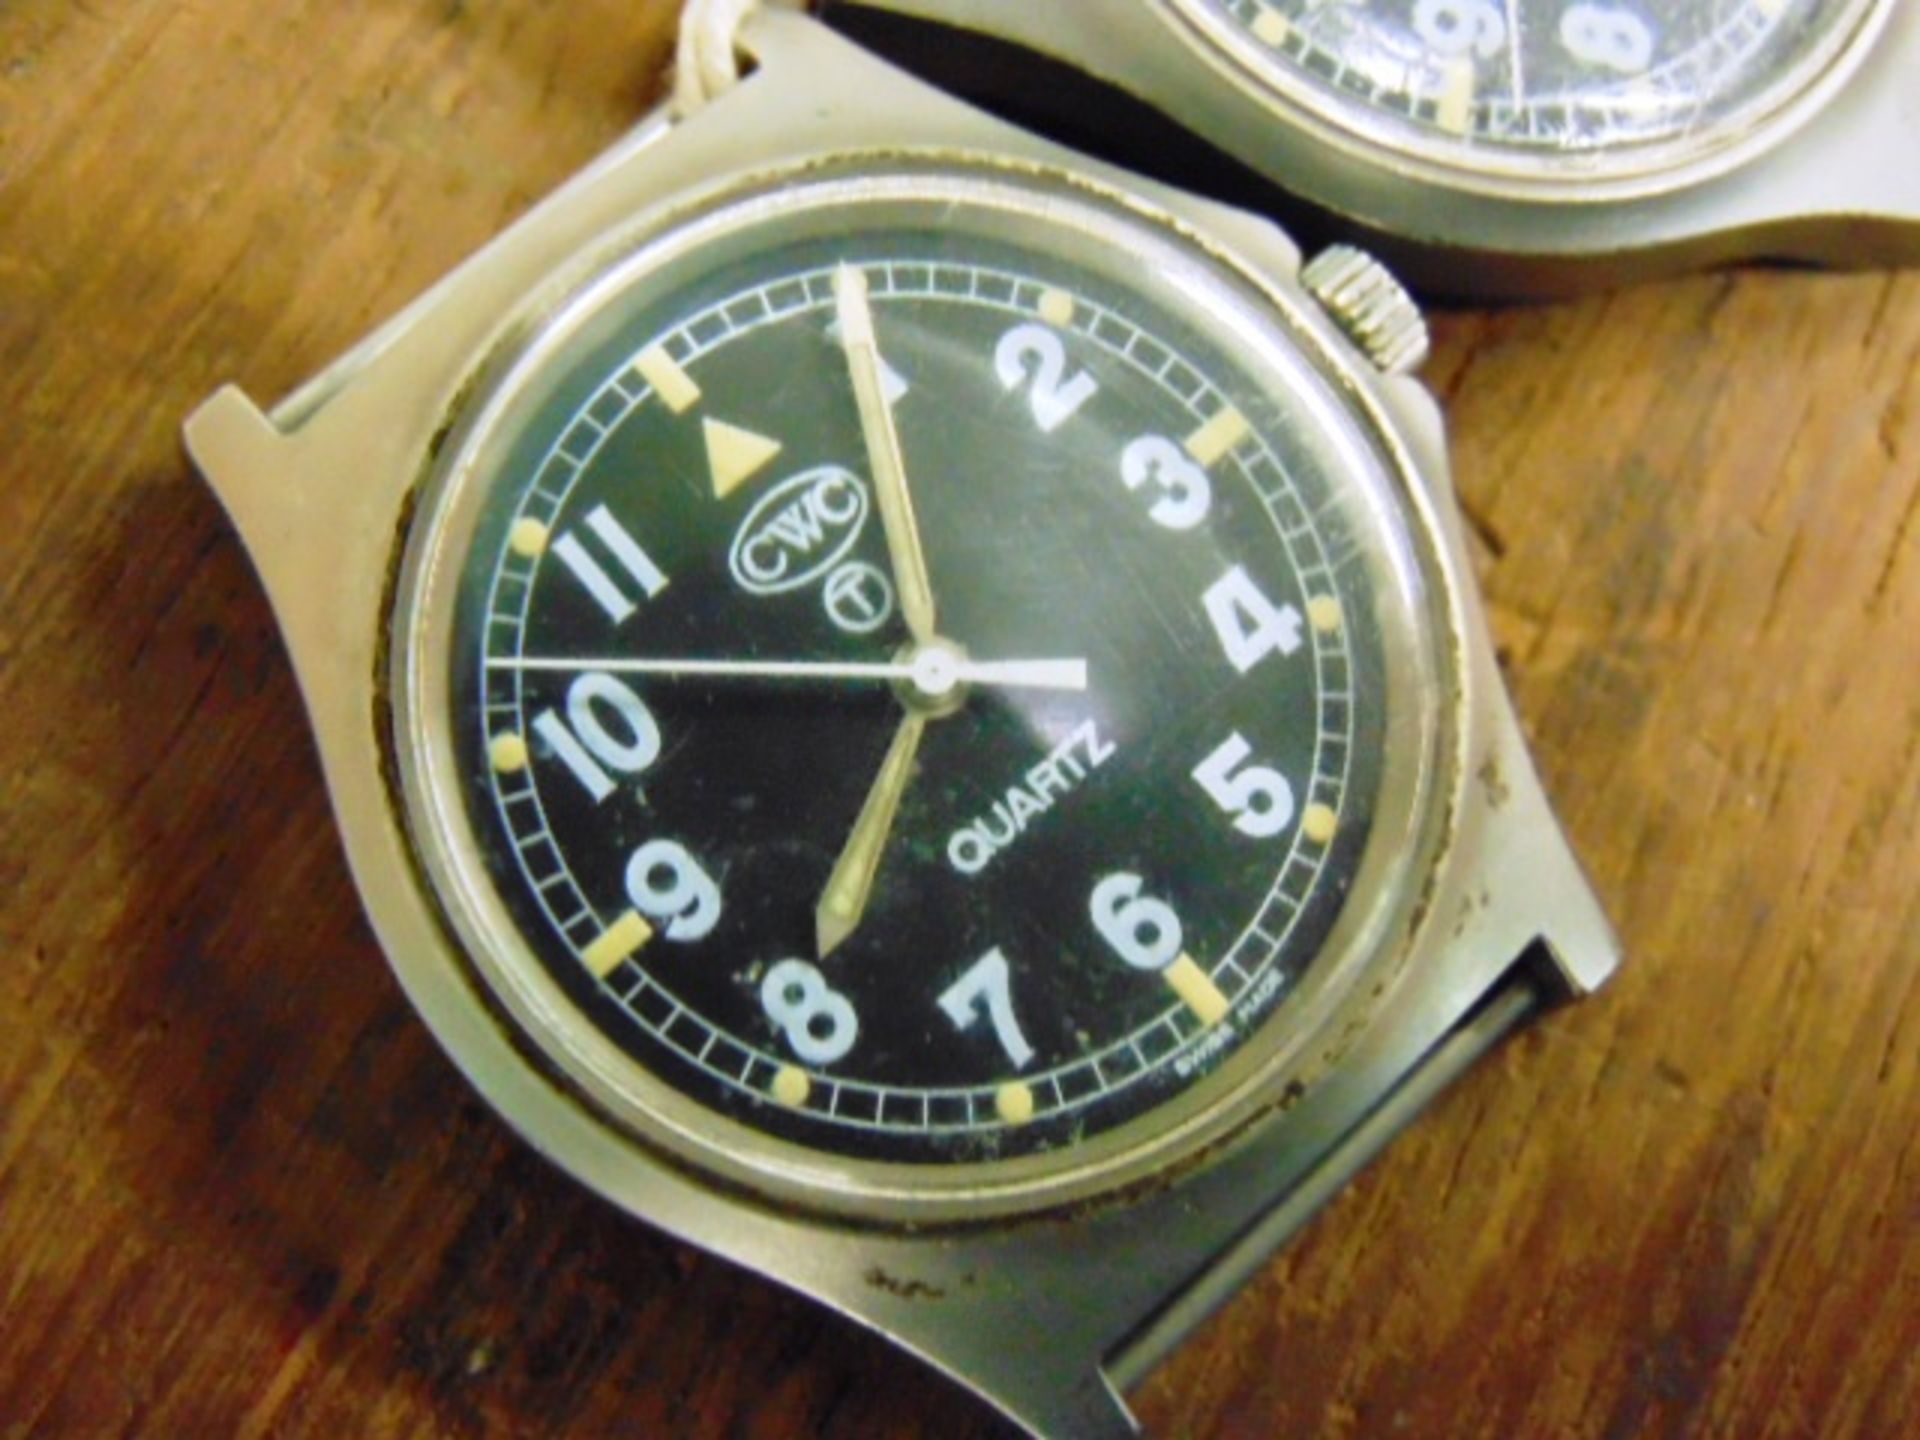 2 x Very Rare Genuine Royal Marines, Navy issue 0555, CWC quartz wrist watches - Image 3 of 5